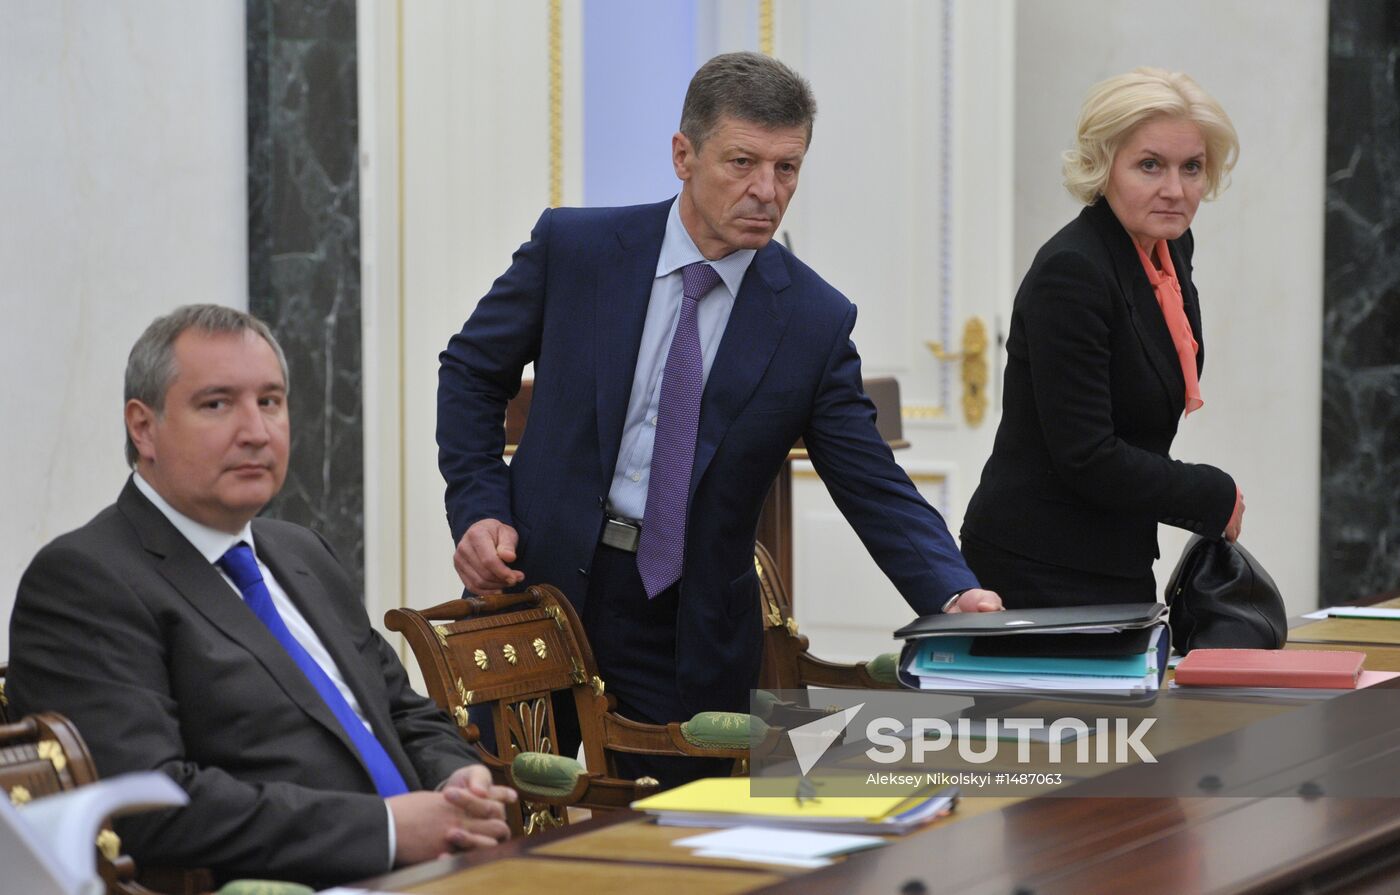 Vladimir Putin chairs meeting in the Kremlin